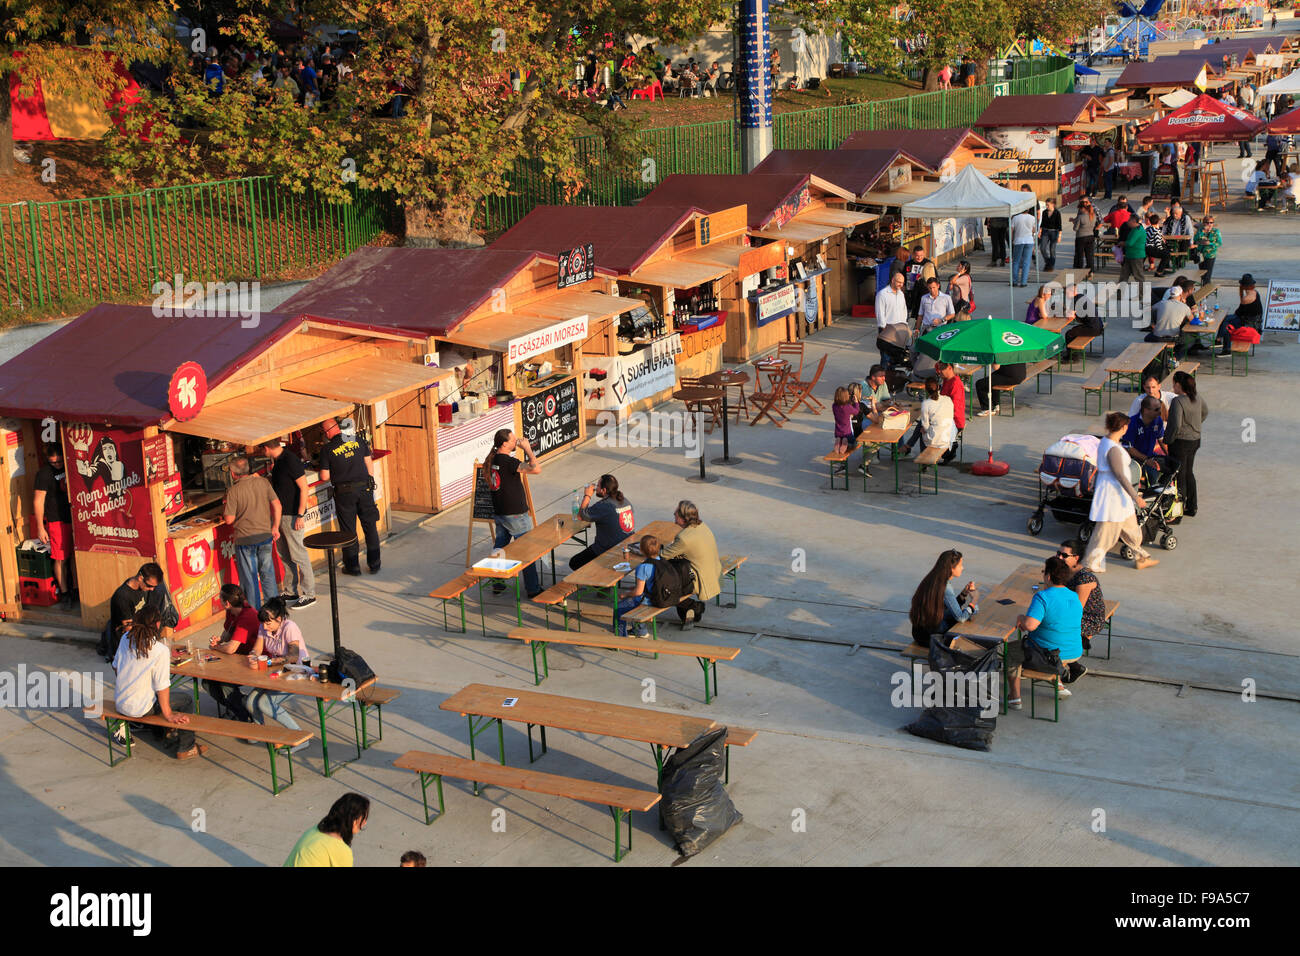 Hungary Budapest Városliget City Park street food stalls people Stock Photo